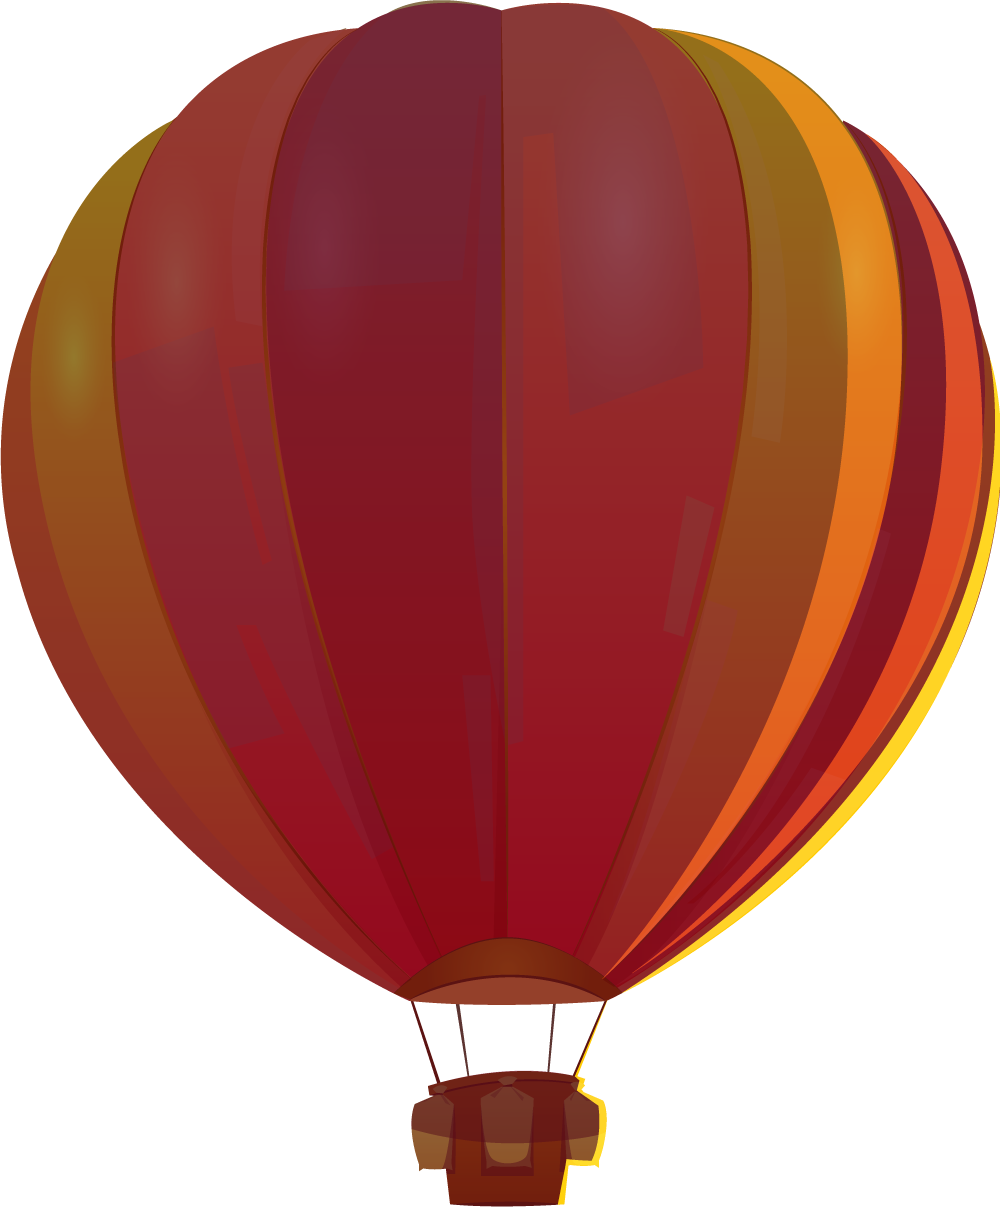 Romantic Hot Air Balloon Ride Dubai at Affordable Ticket Price